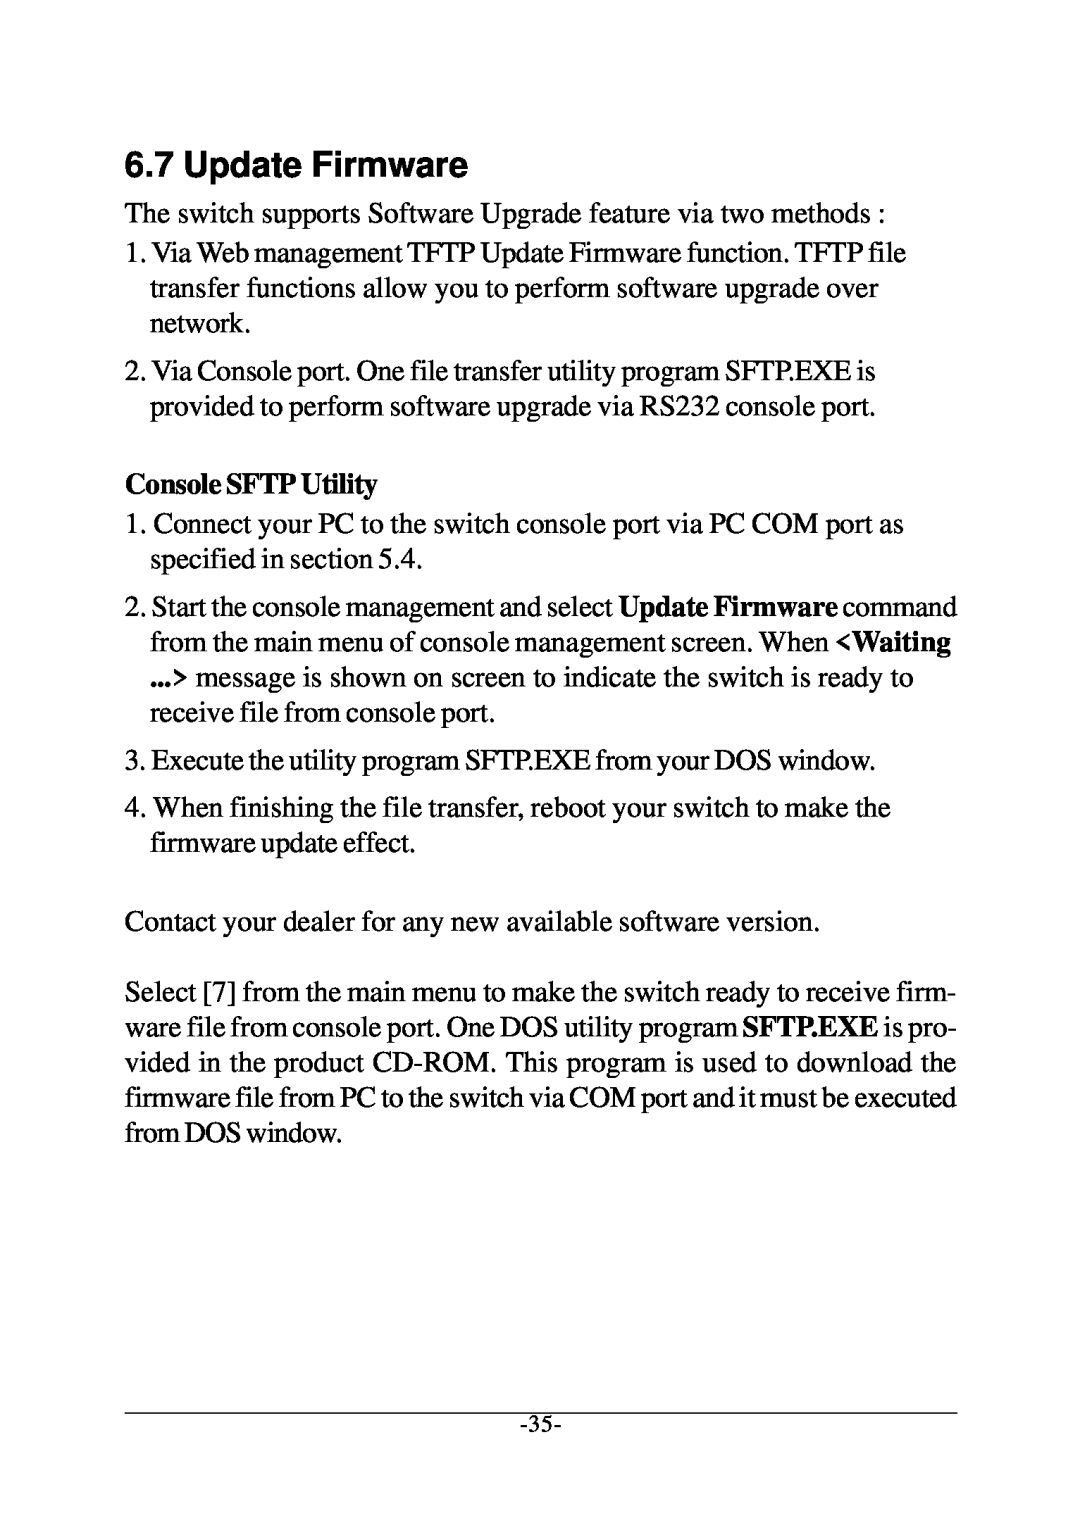 Xerox KS-801 operation manual Update Firmware, Console SFTP Utility 